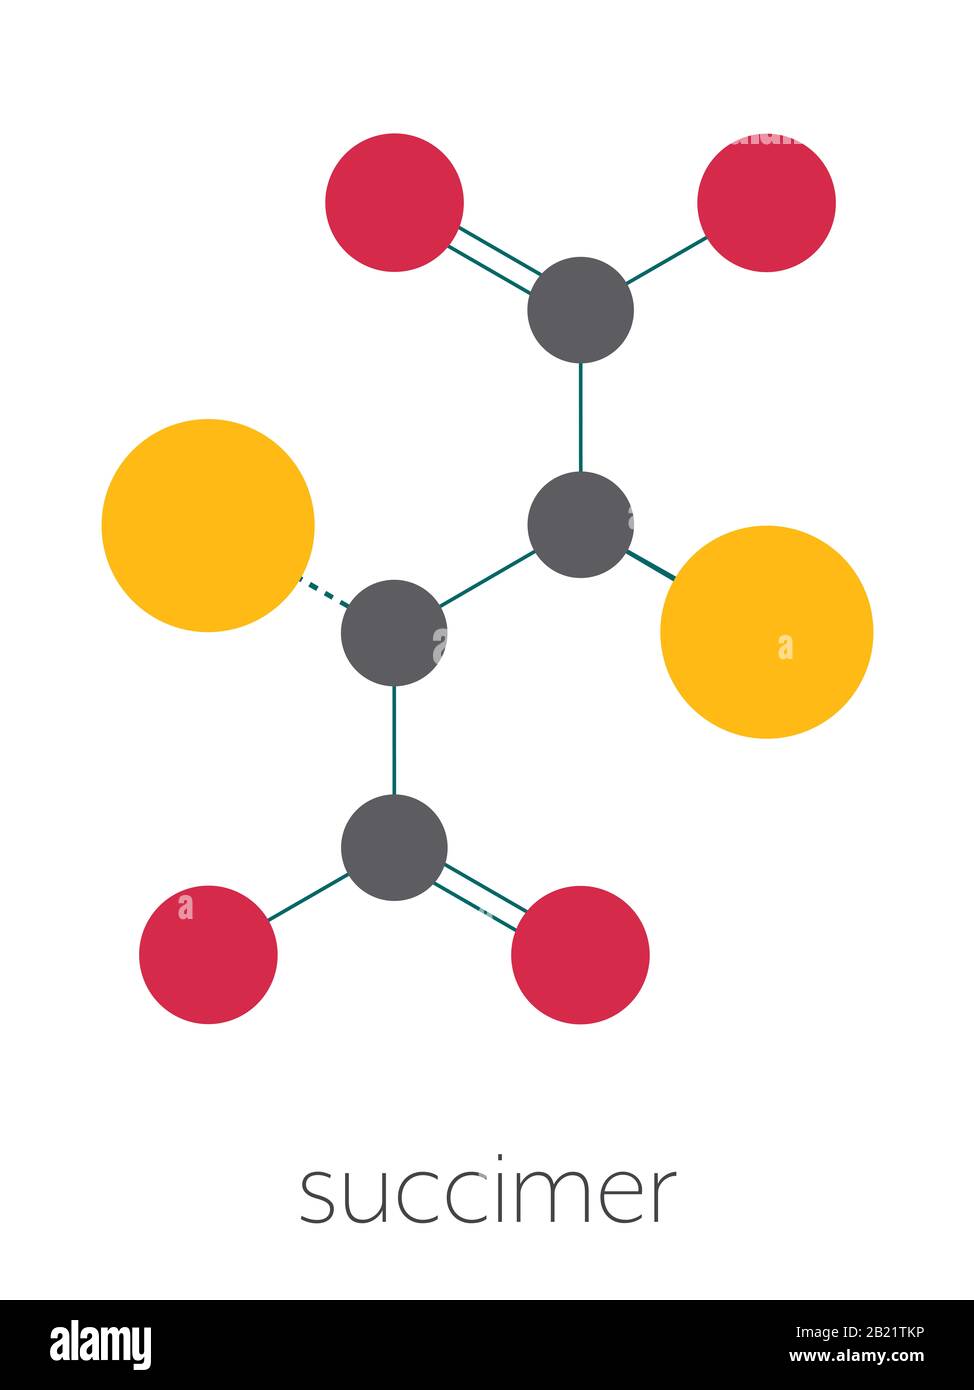 Succimer lead poisoning drug, illustration Stock Photo